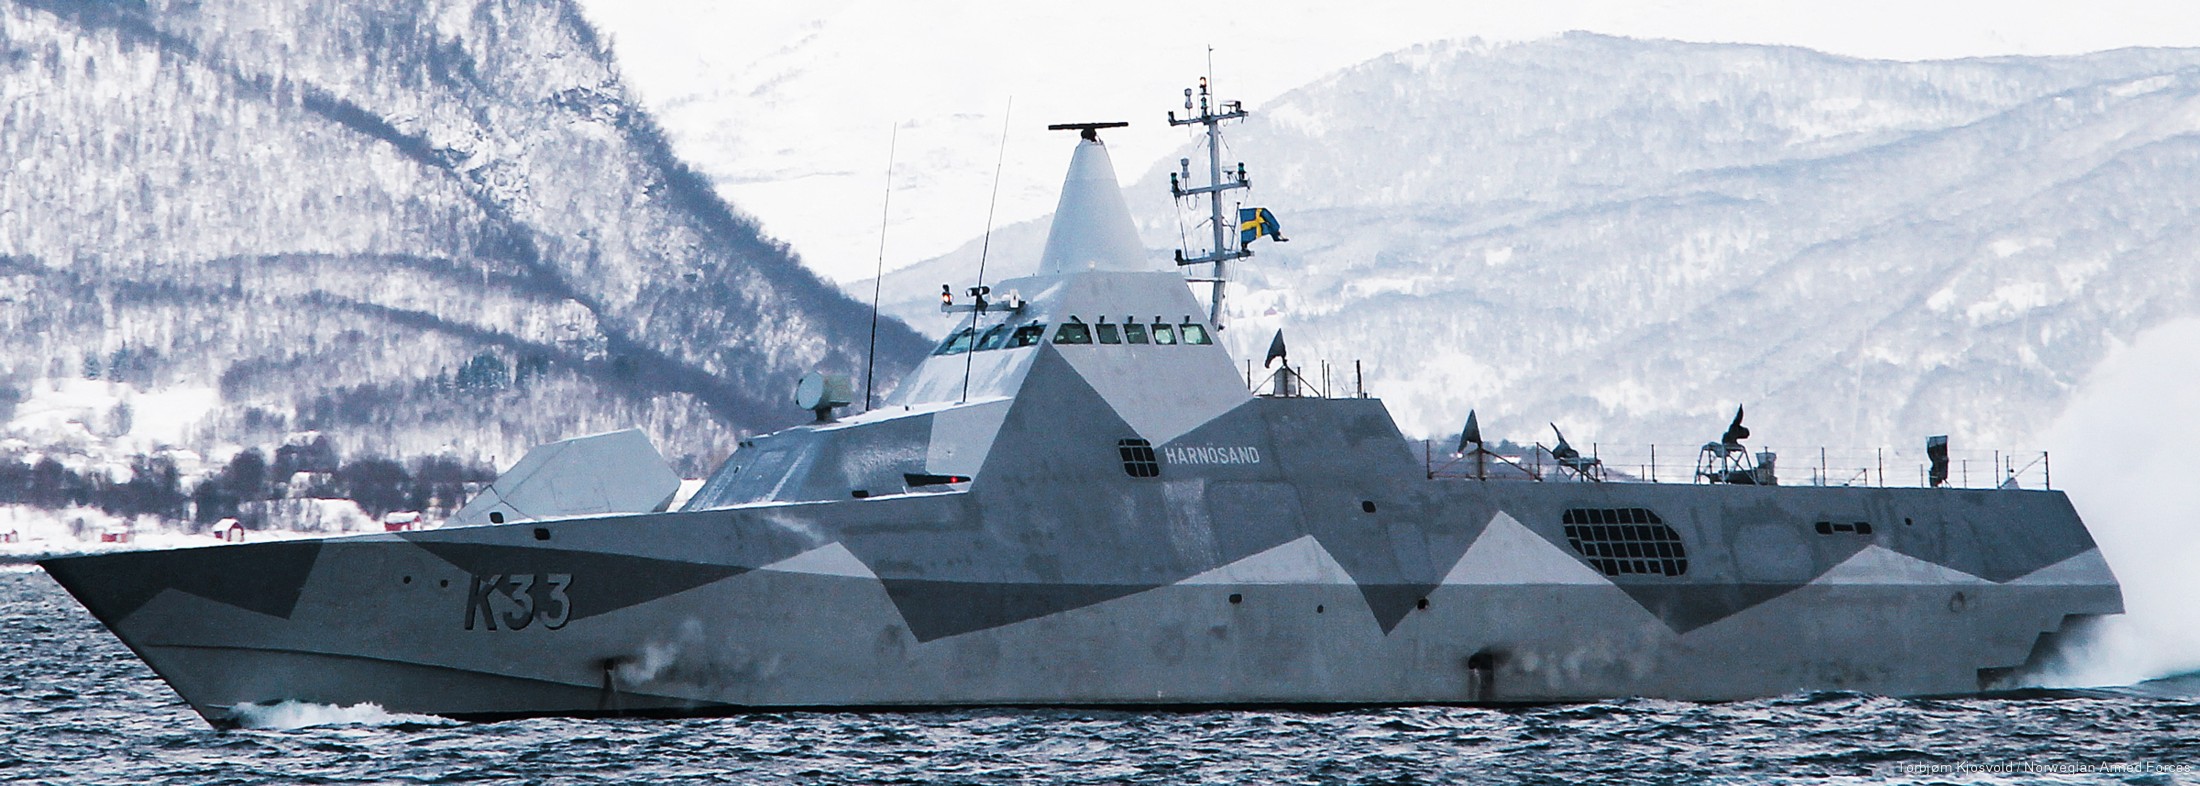 k33 hswms hms harnosand visby class corvette royal swedish navy svenska marinen 02